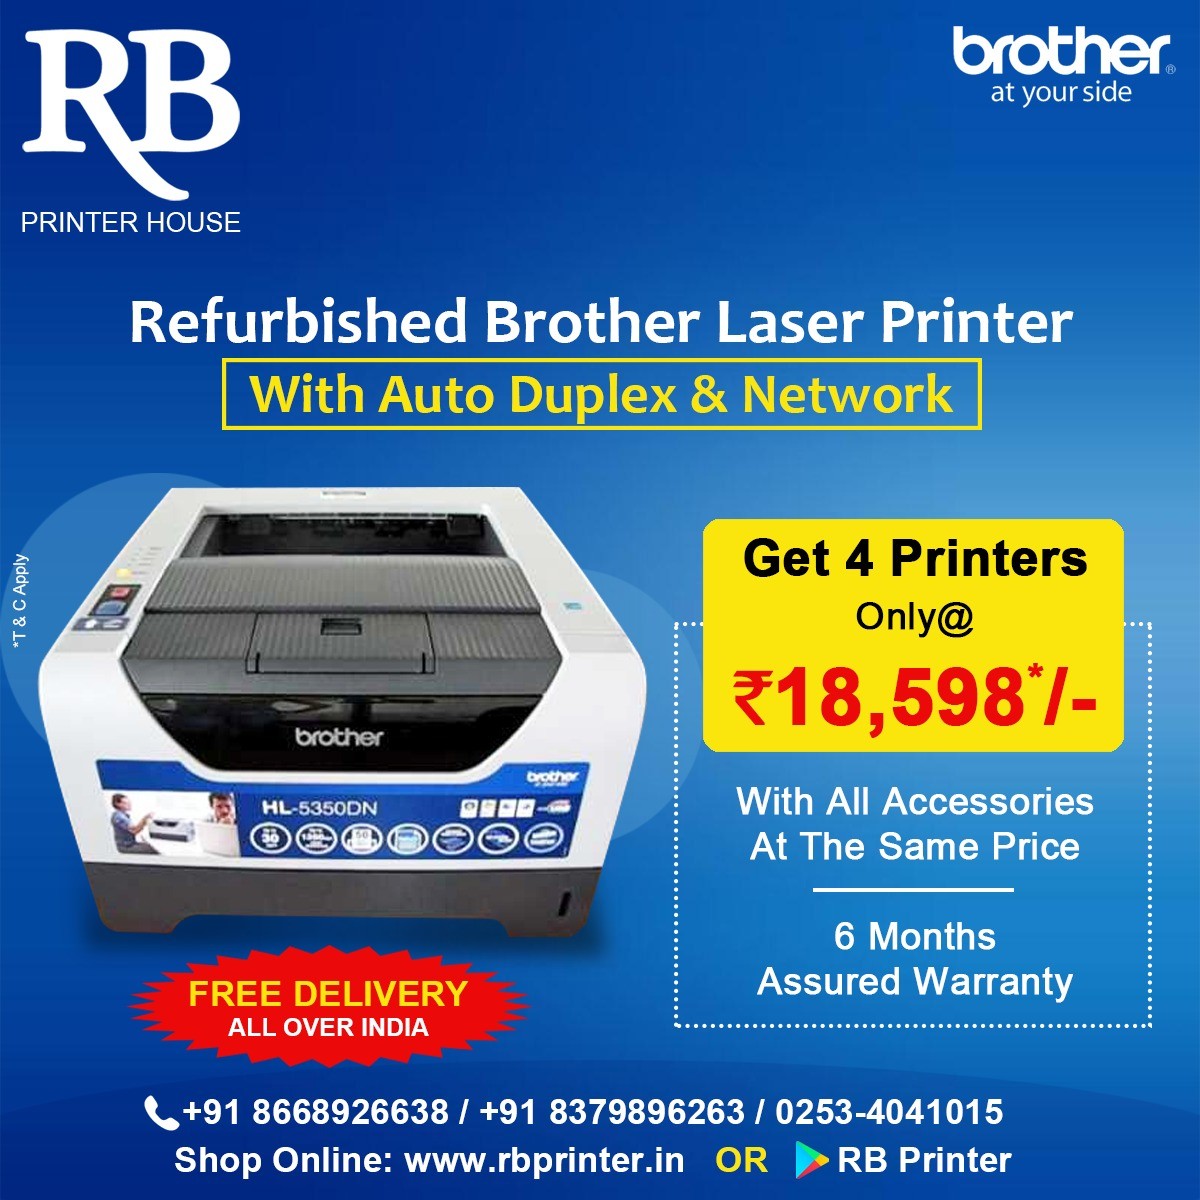 RB Printers promo